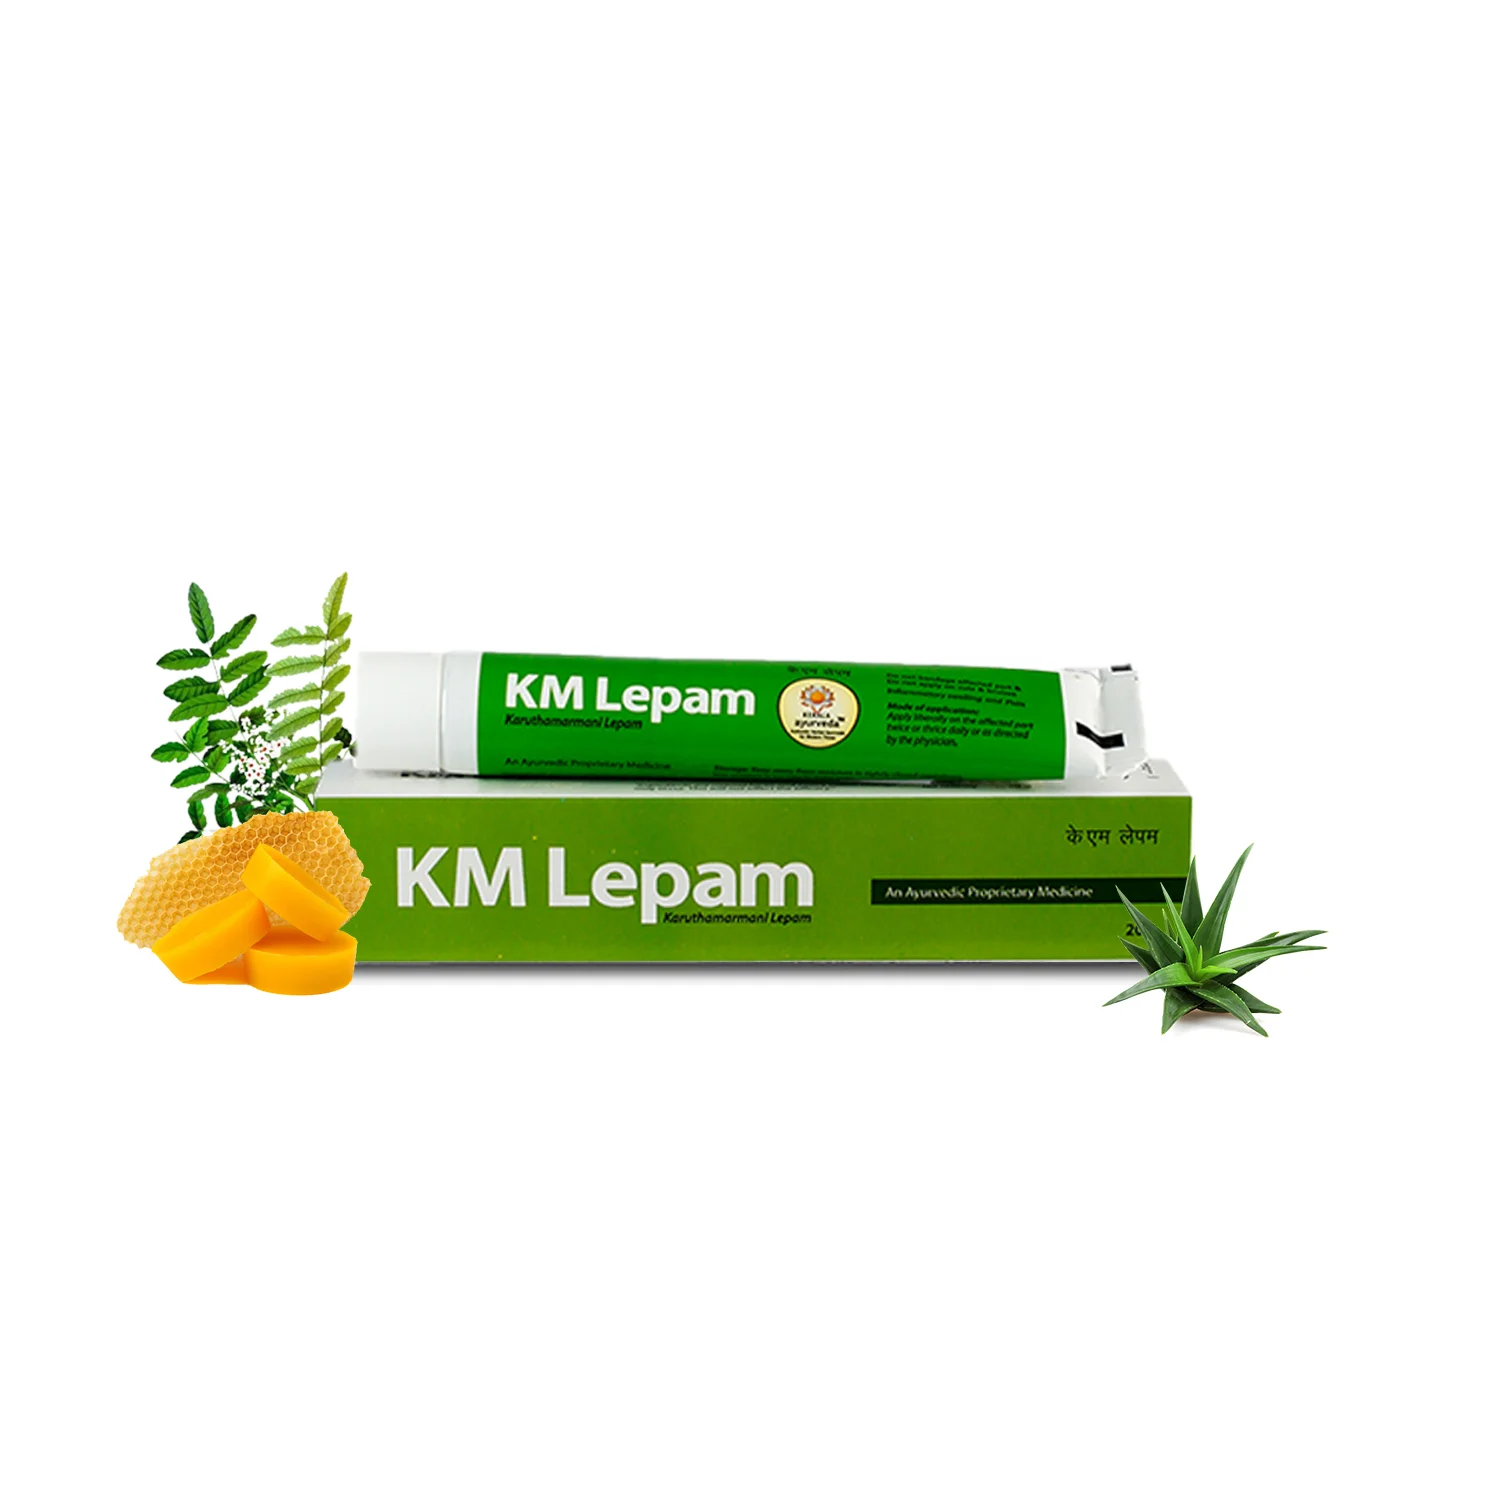 KM Lepam (Ointment)